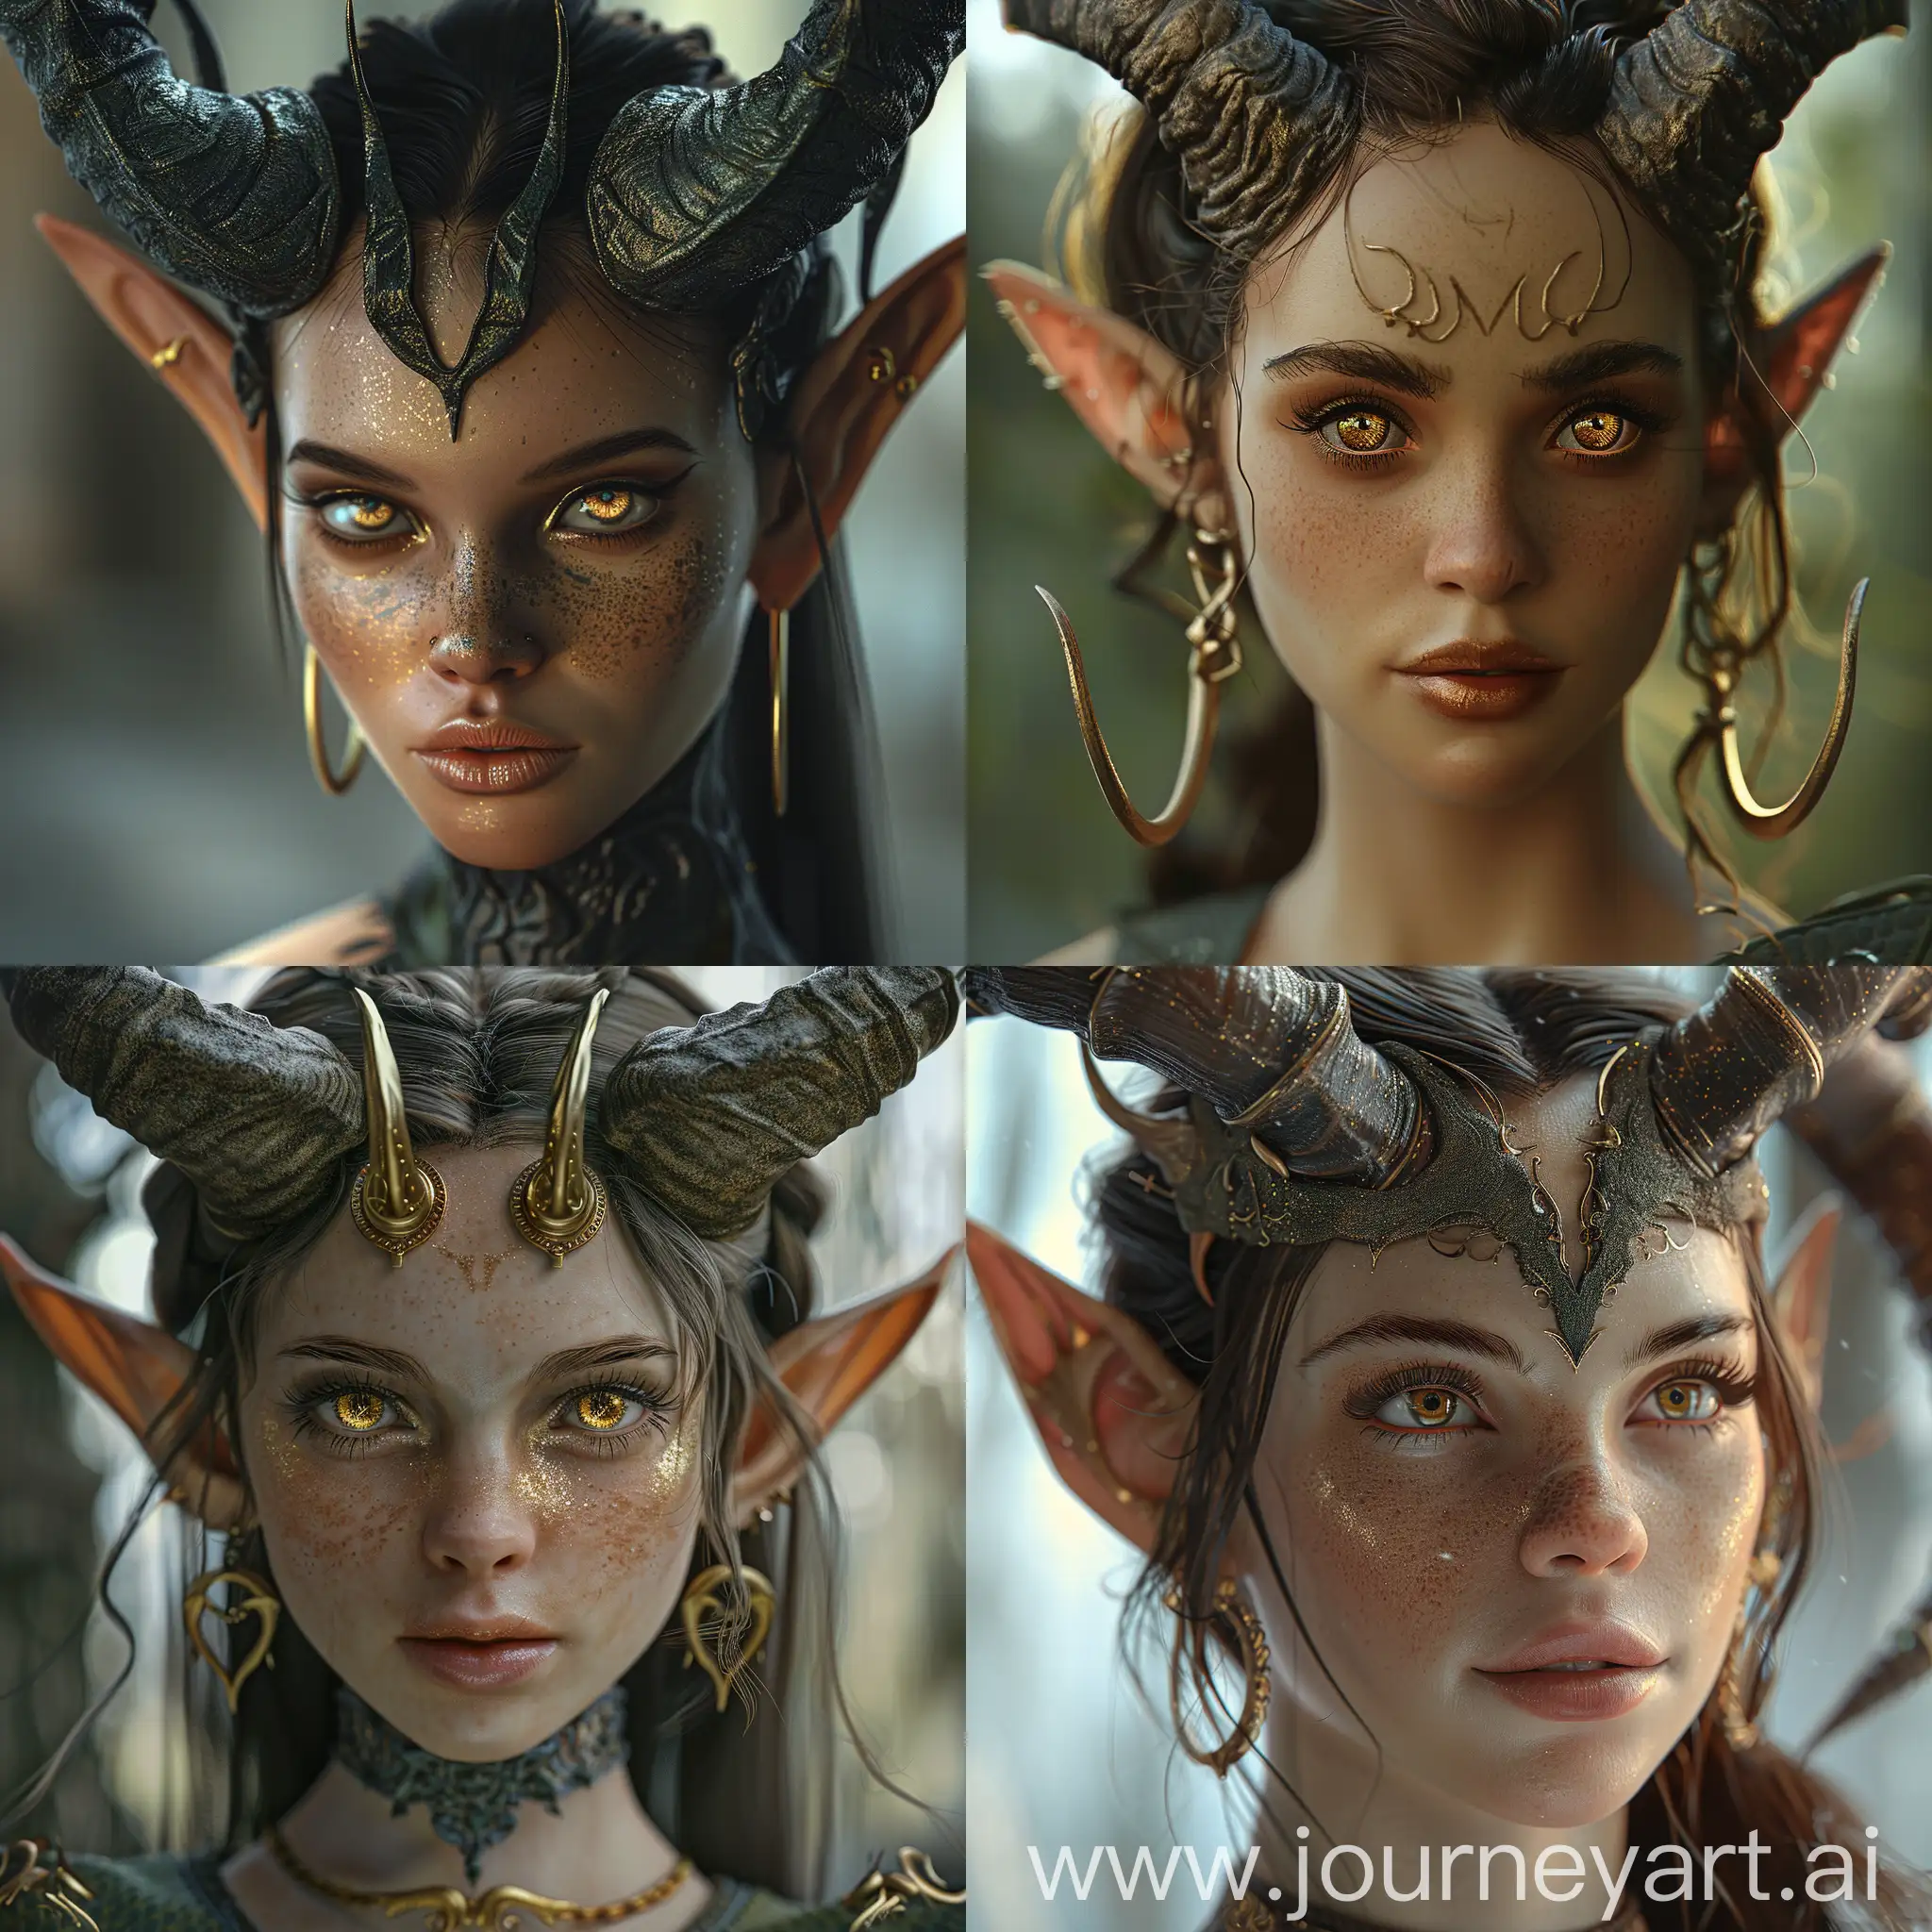 Hyperrealistic-Portrait-of-an-Elegant-Elf-Woman-with-Horns